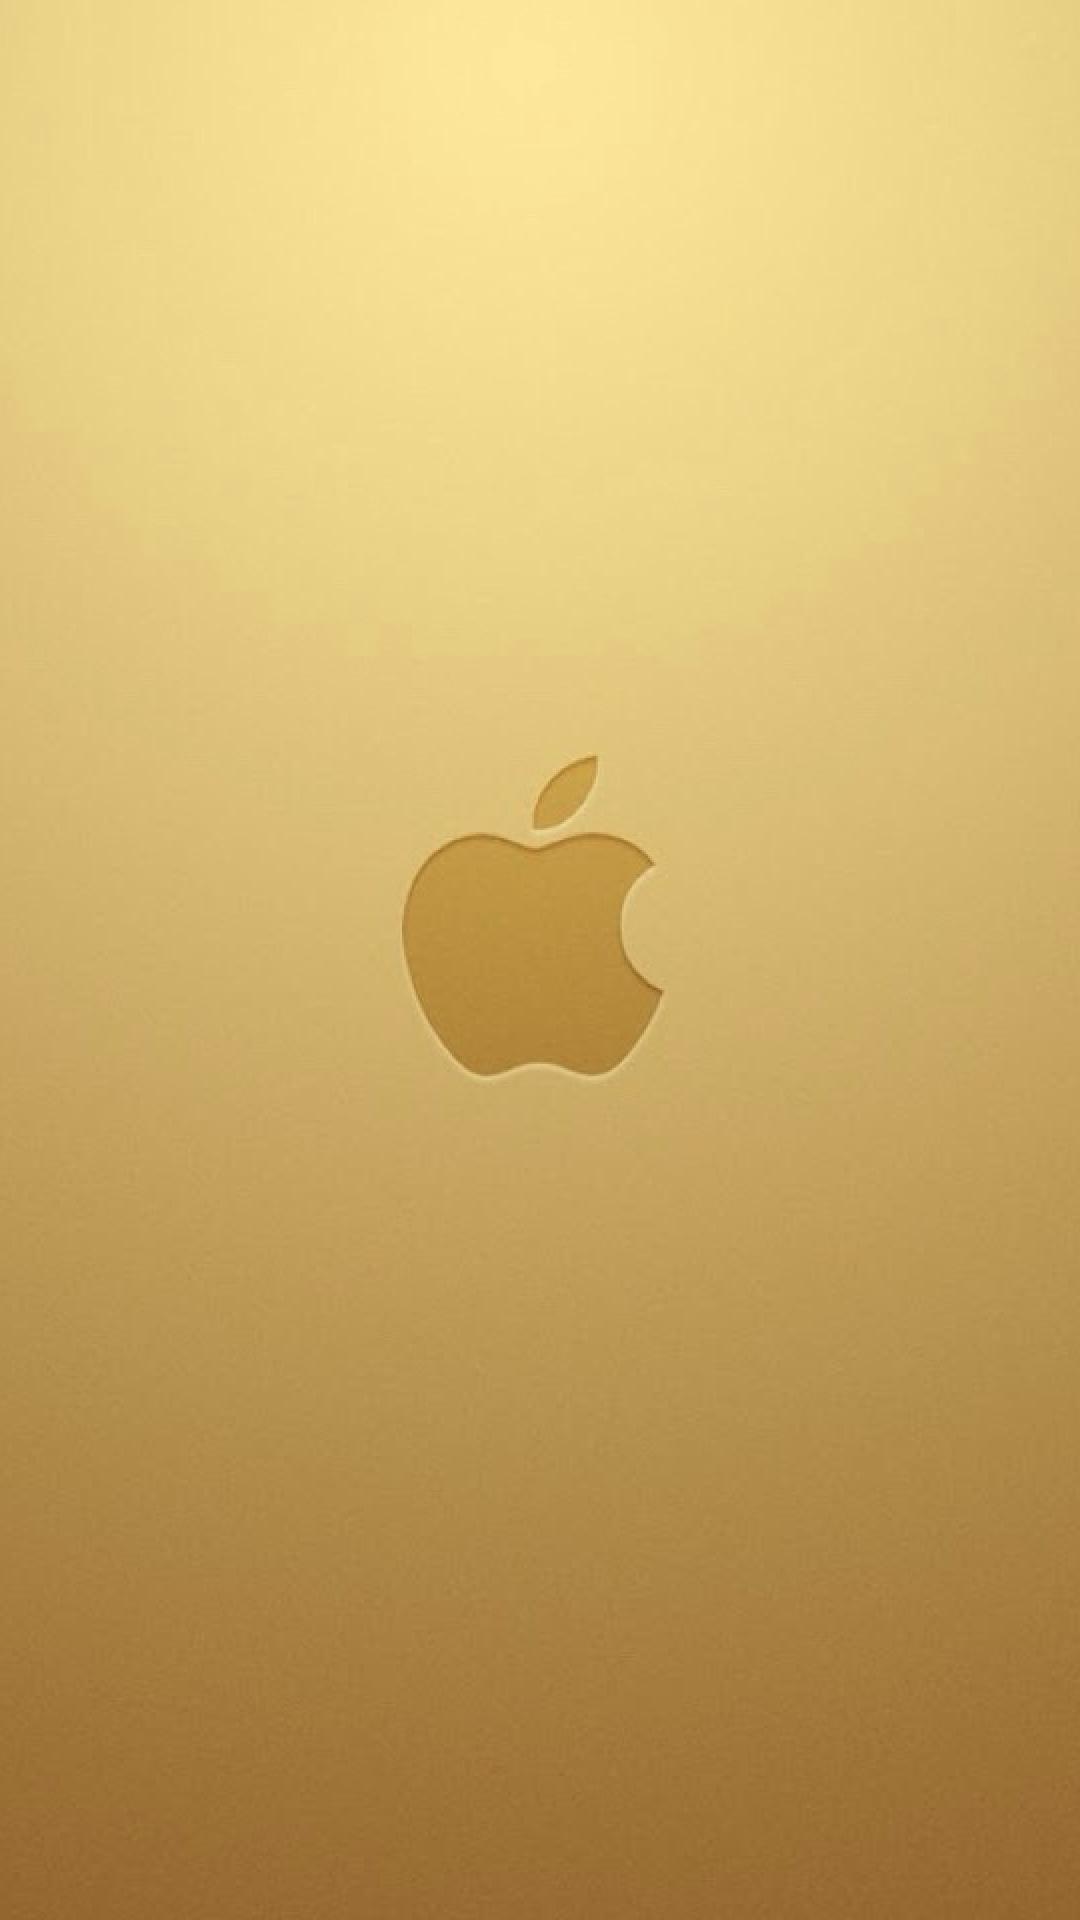 1080 x 1920 · jpeg - Gold iPhone Wallpapers - Wallpaper Cave